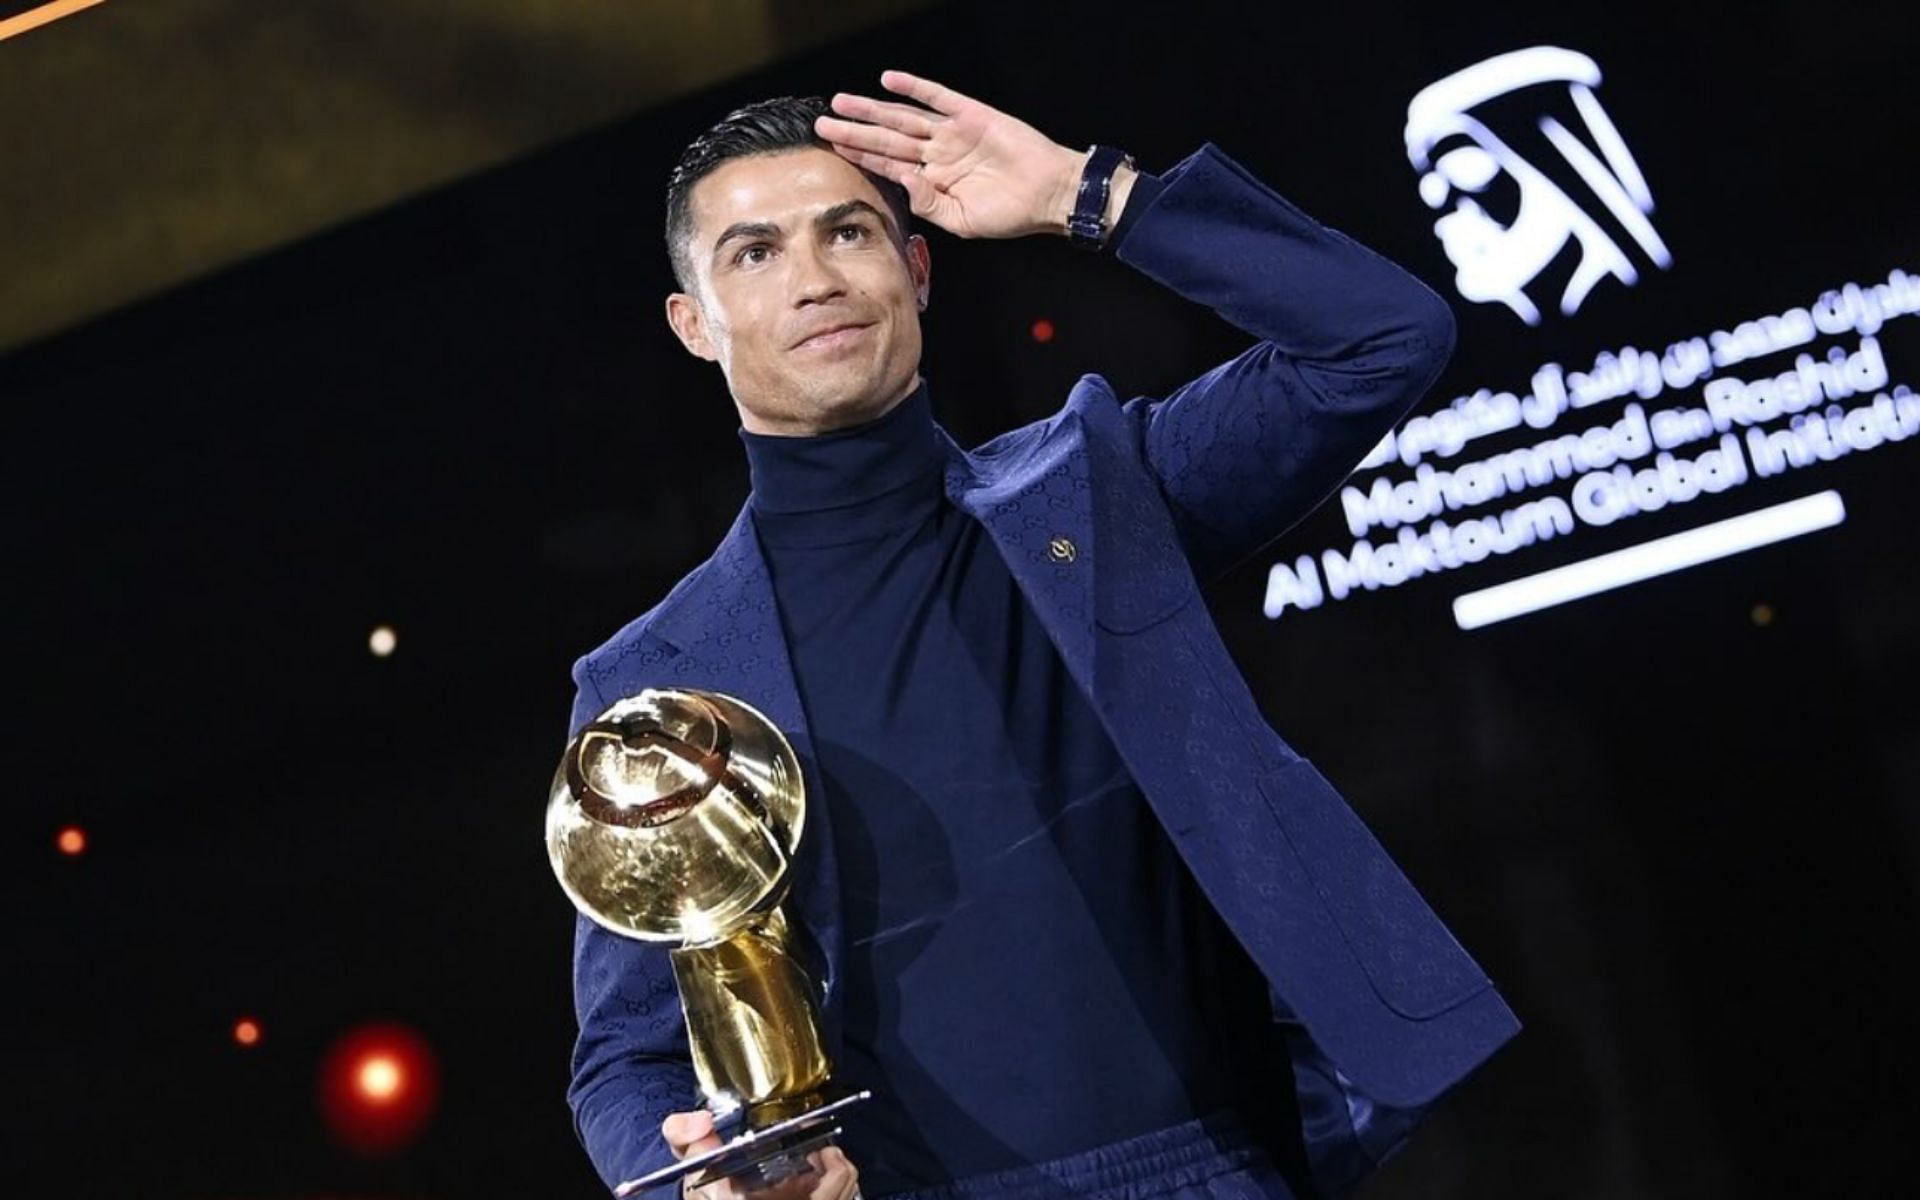 Cristiano Ronaldo accepting his award at the Globe Soccer Awards [Photo Courtesy @cristiano on Instagram]